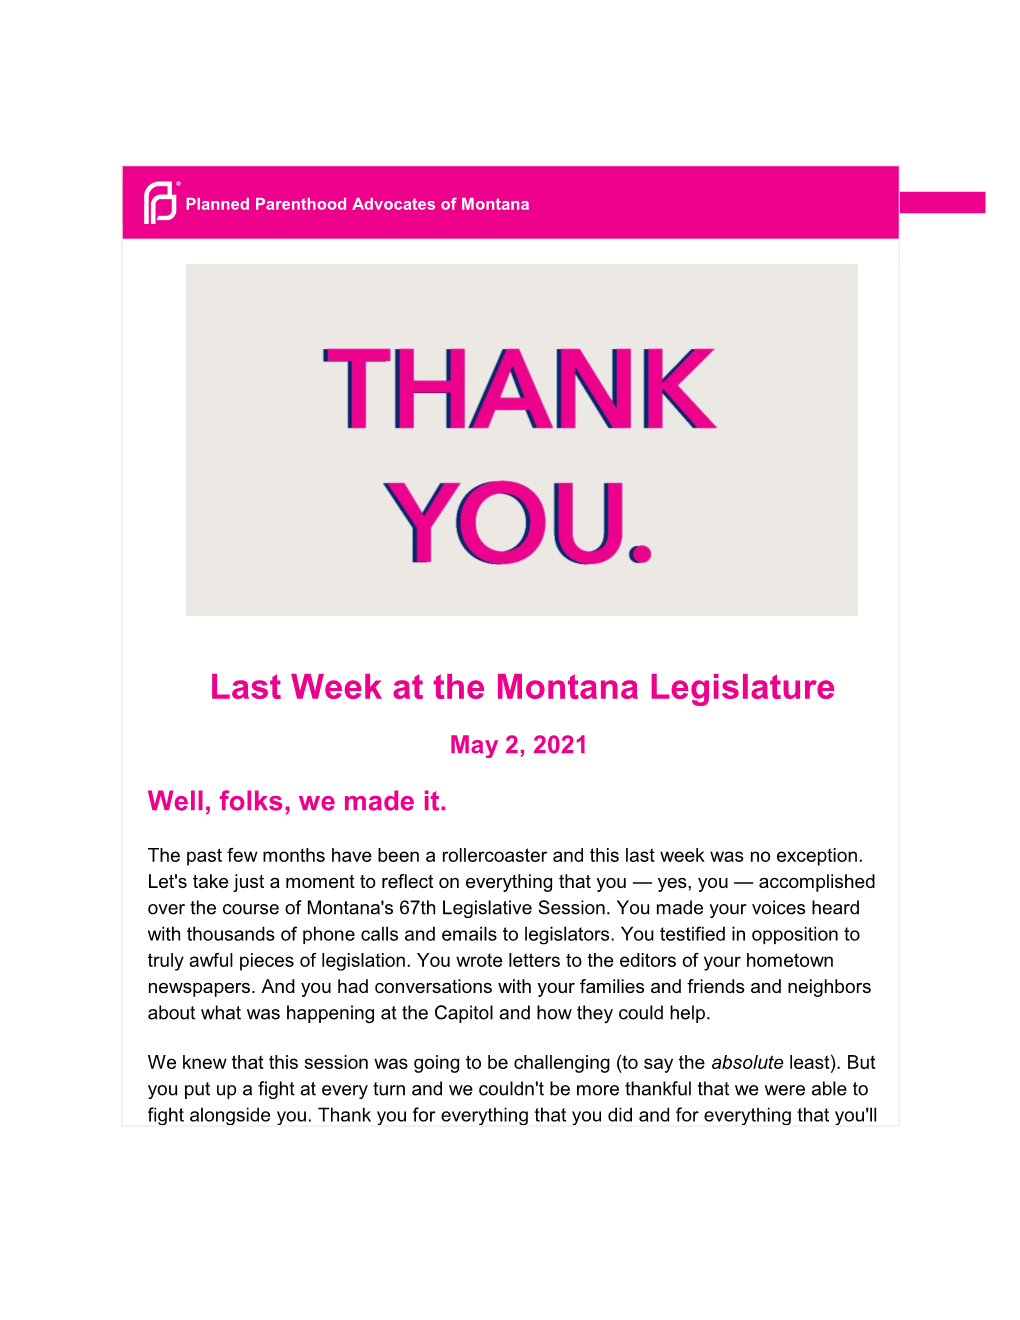 Last Week at the Montana Legislature